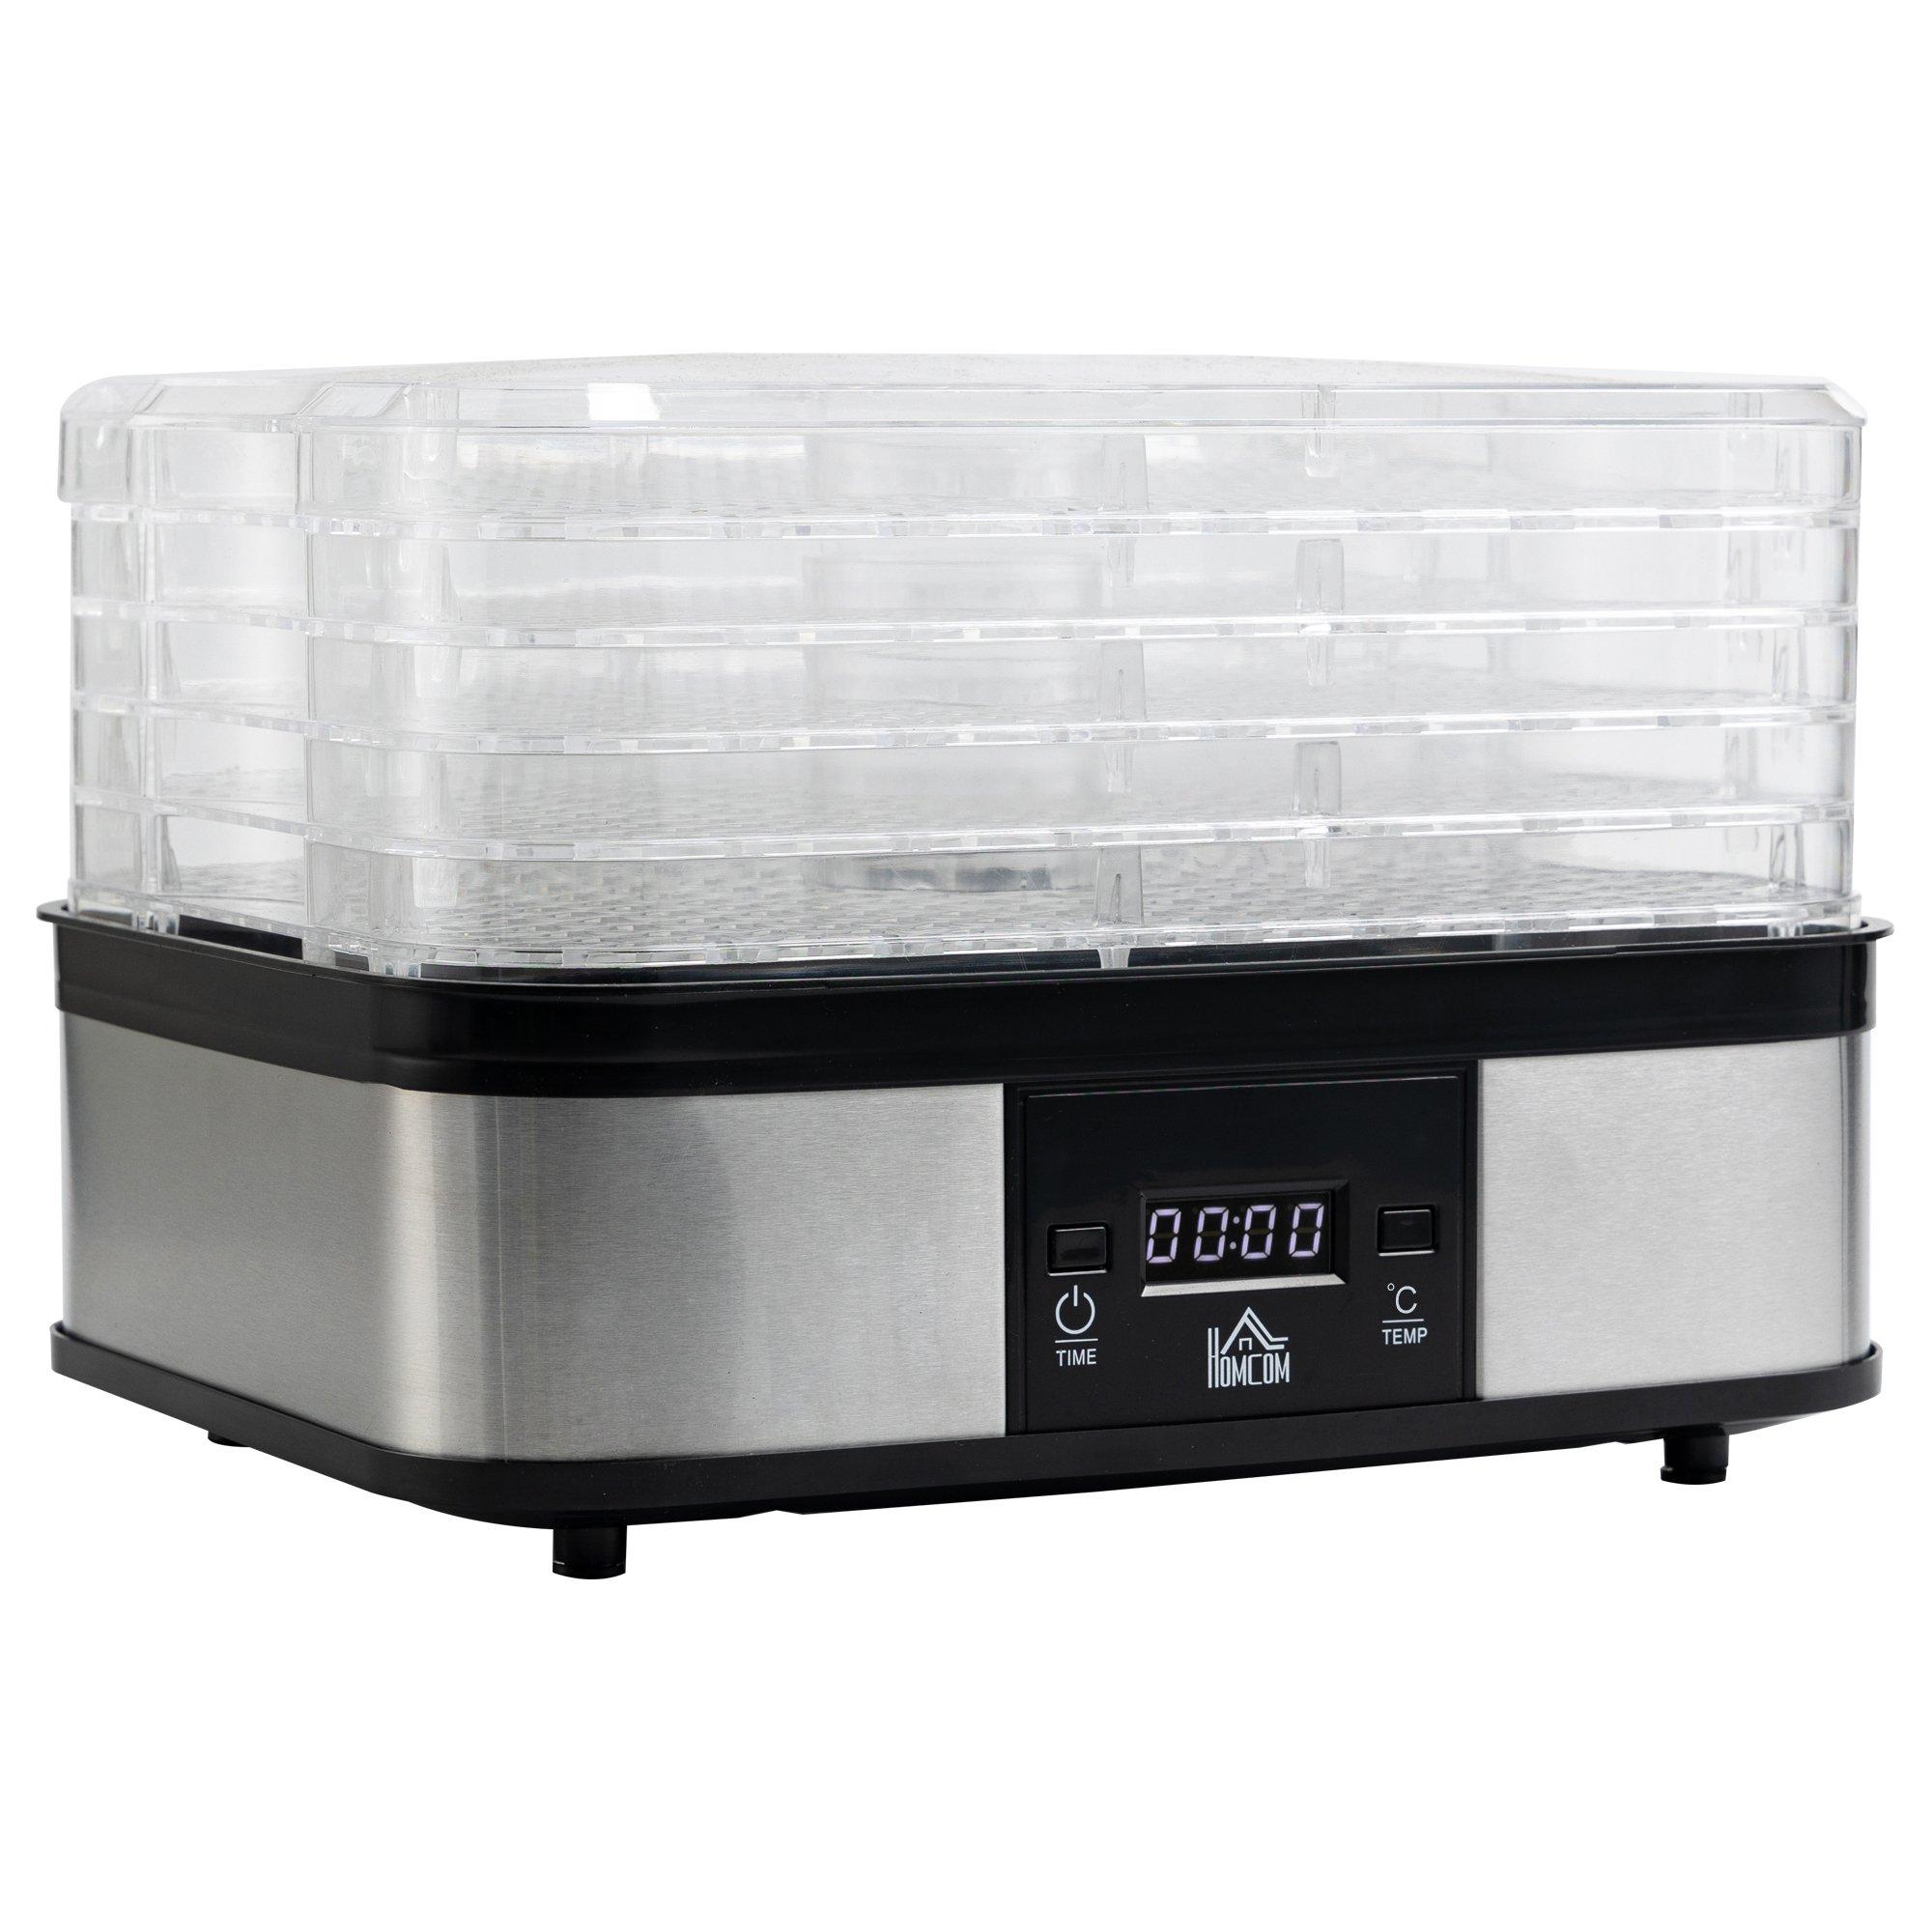 5 Tier Food Dehydrator 245W Muti Food Dryer Adjustable Temperature